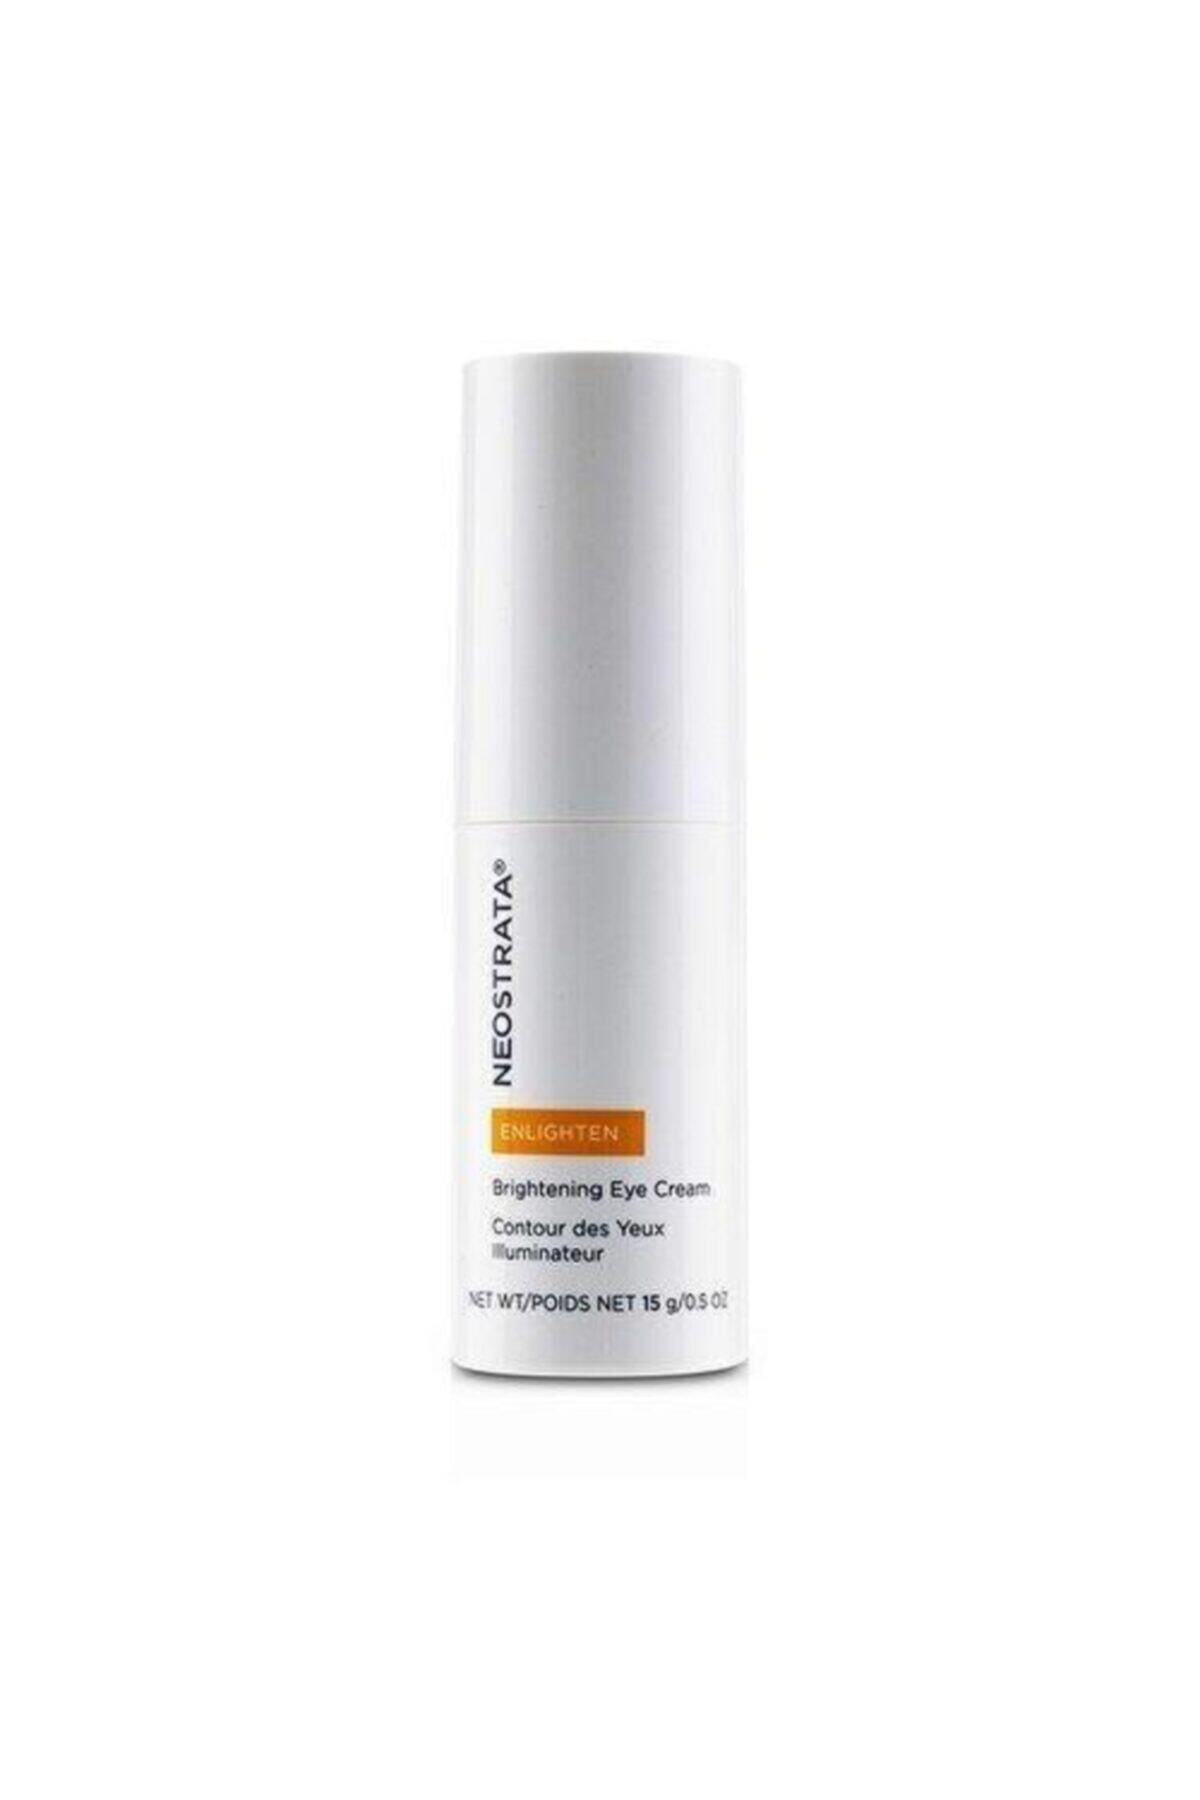 NeoStrata Enlighten Anti-Aging and Brightening Eye Cream for Dark Under-Eye Circles (15 gr) Care PSSNS518